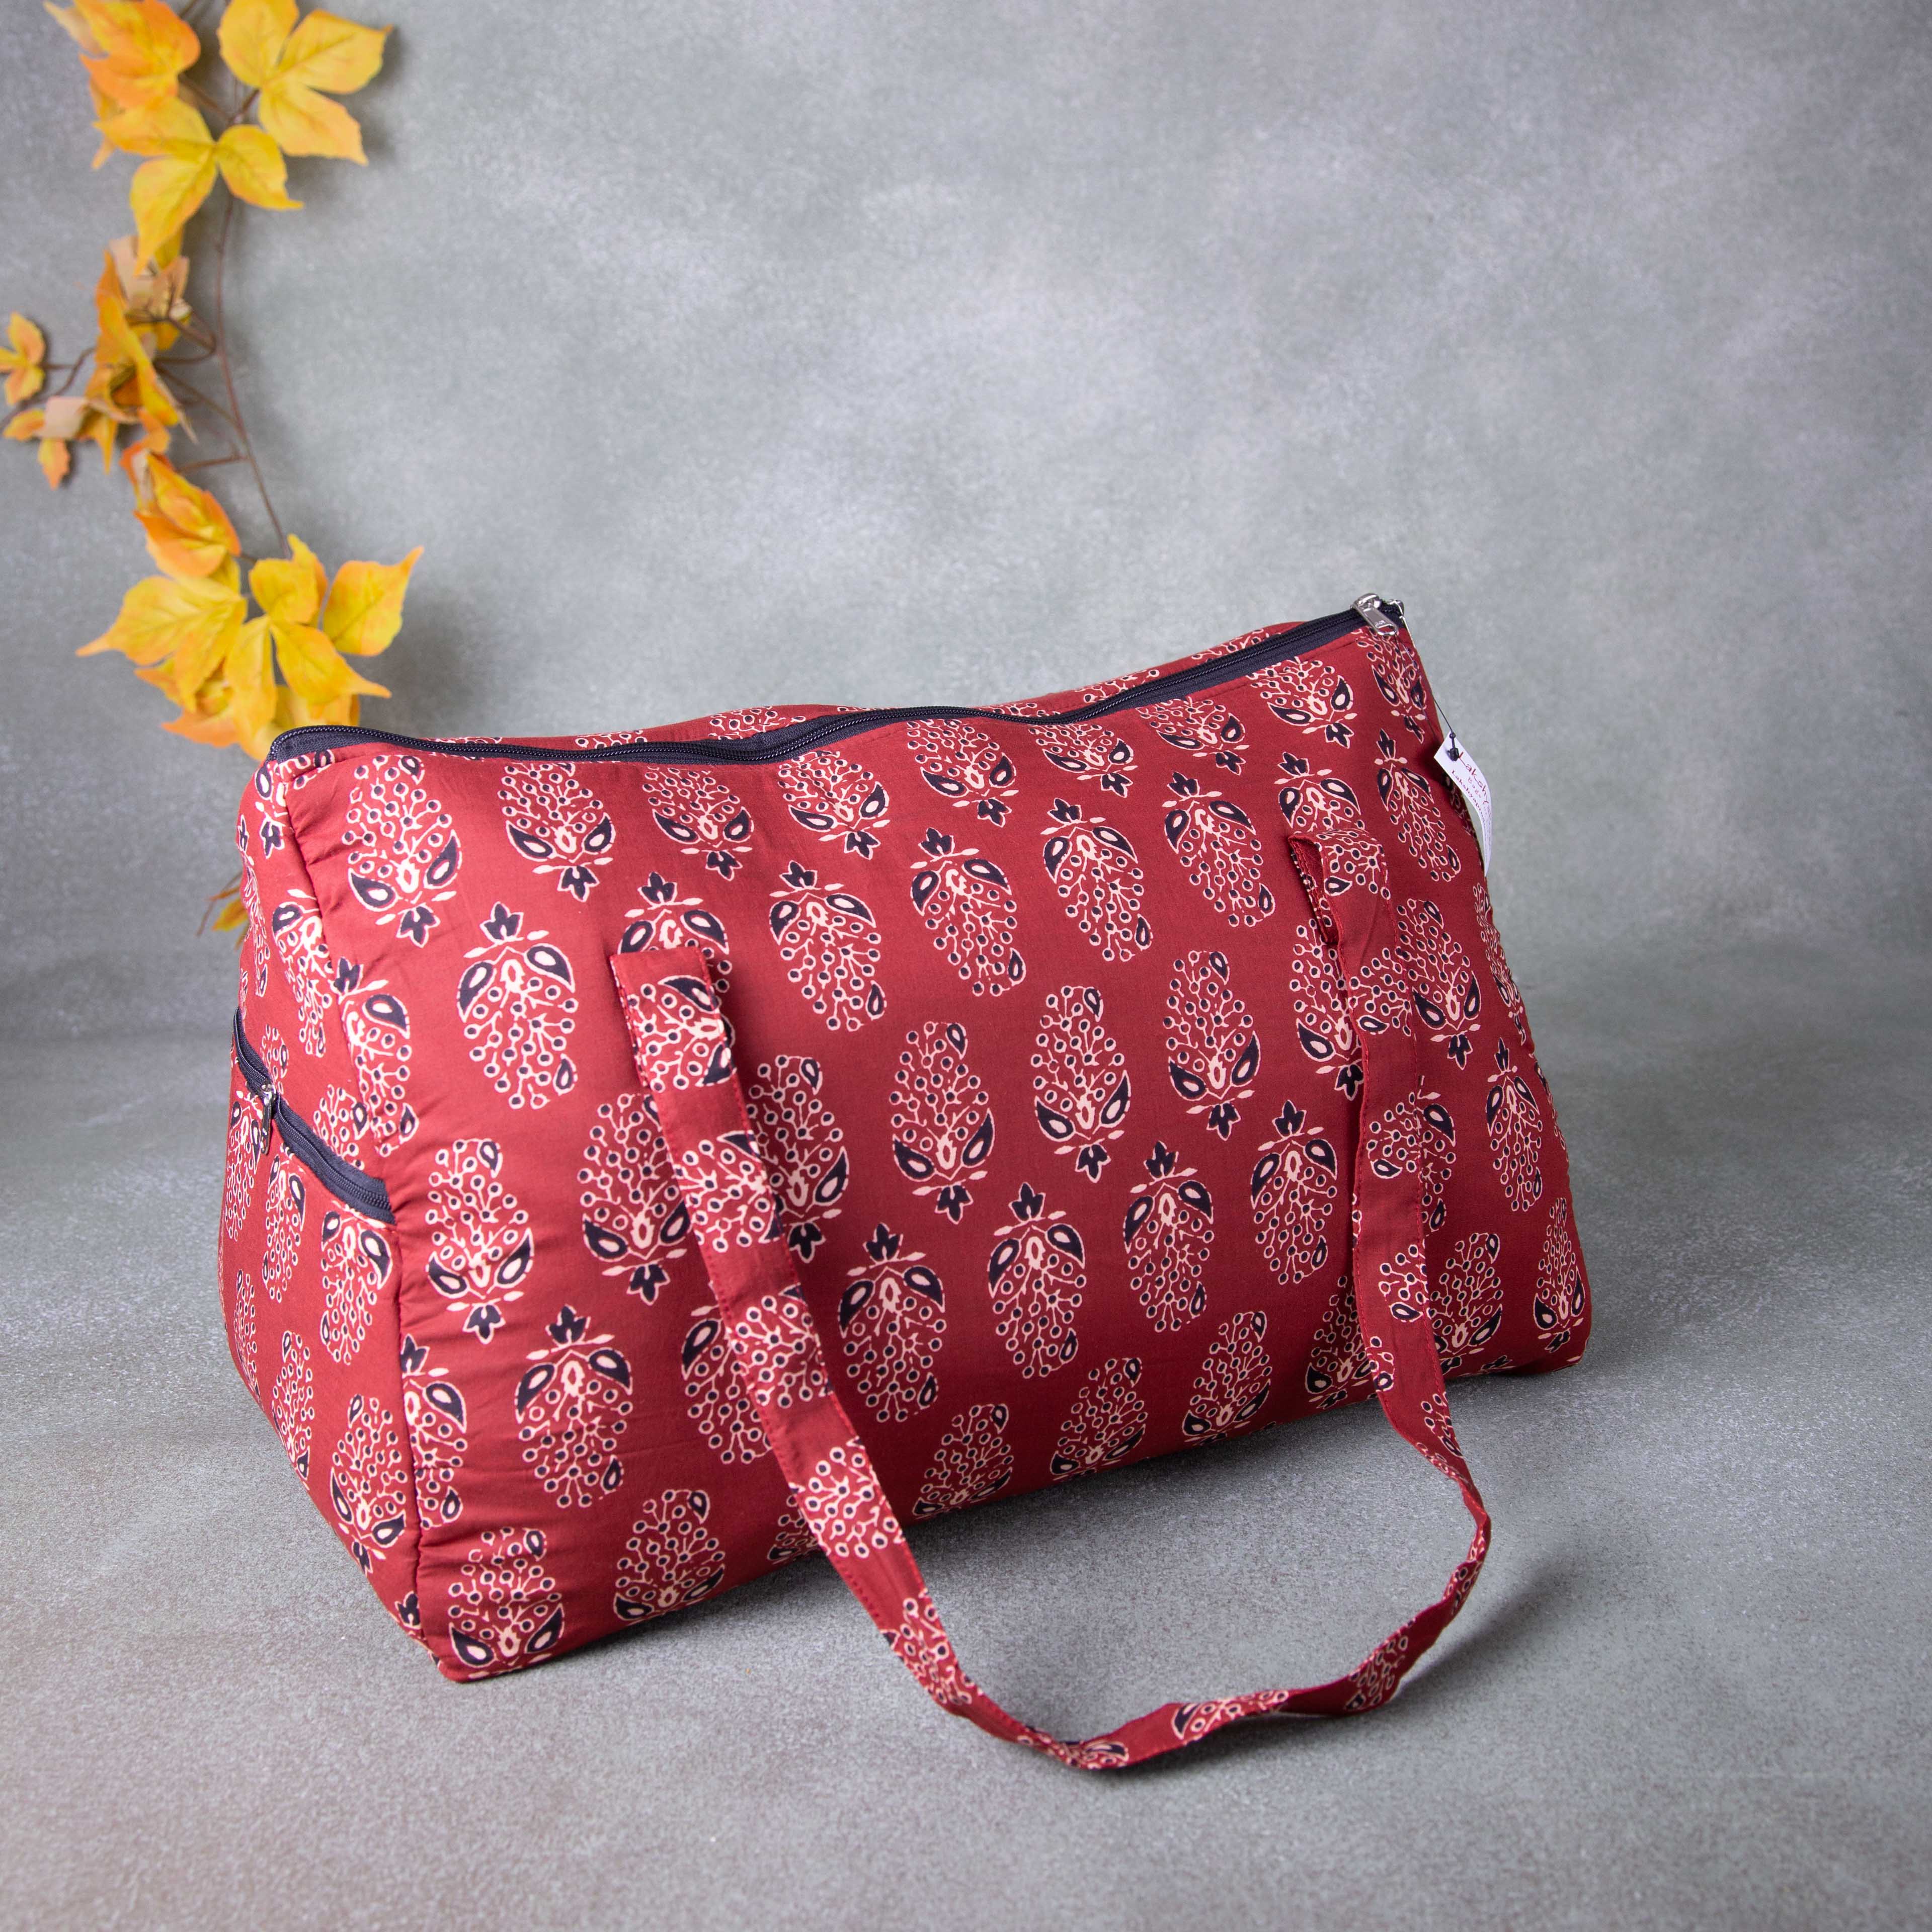 Fuchsia-colored Change purse TOUS Lucia | TOUS